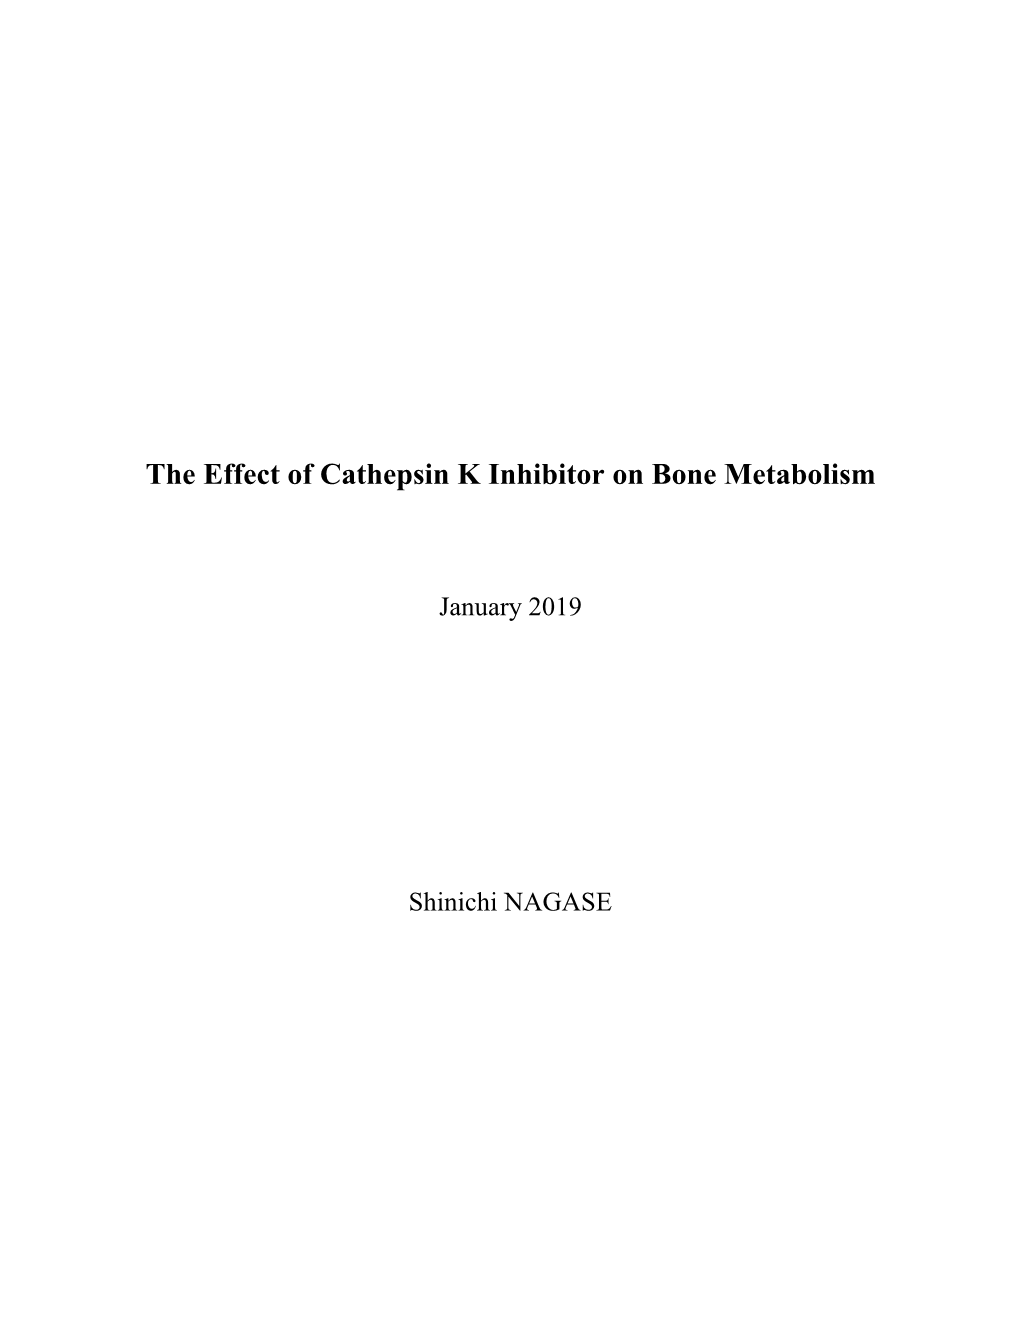 The Effect of Cathepsin K Inhibitor on Bone Metabolism